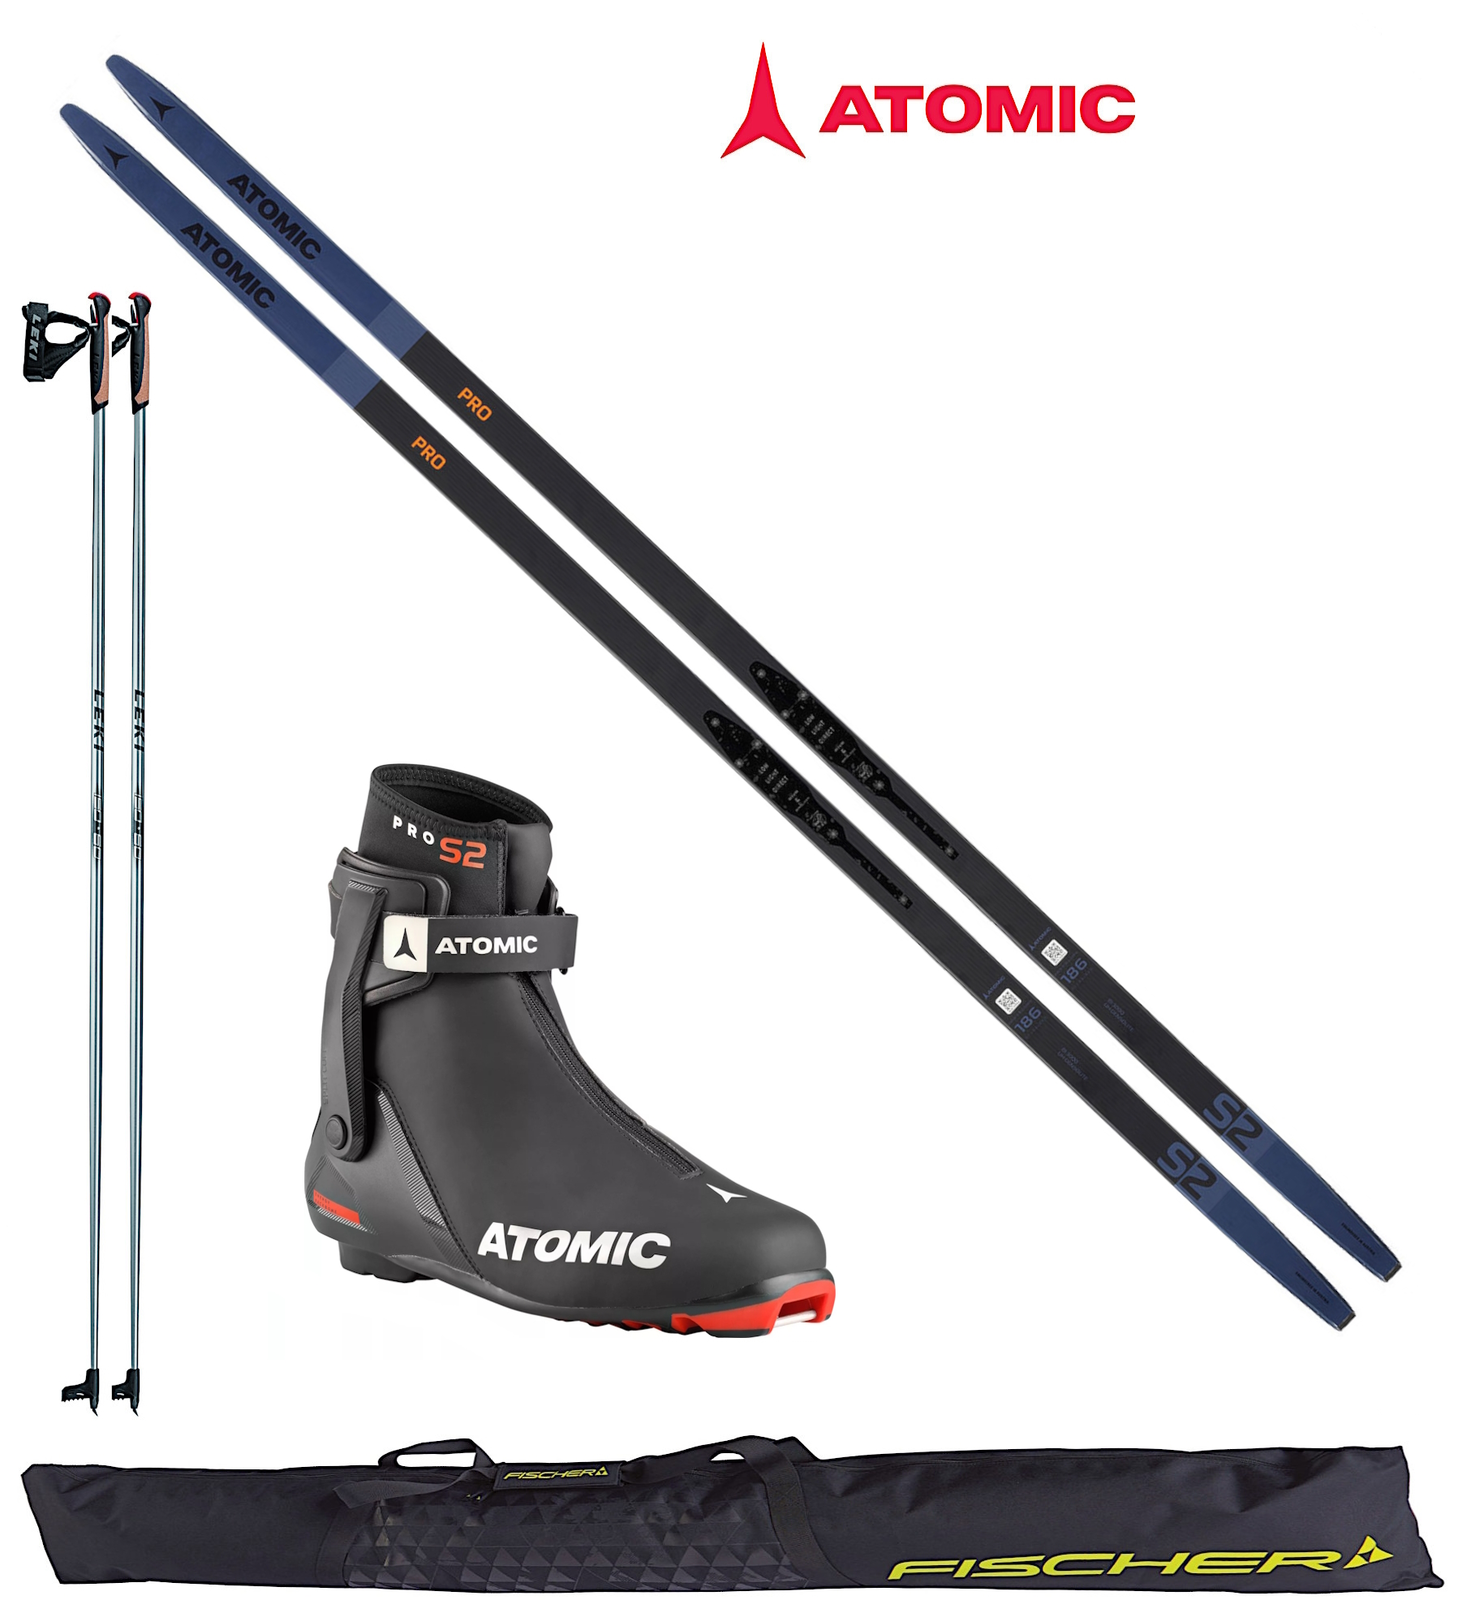 Atomic Pro S2 Skatingski + Bindung + Schuhe + Stöcke + Skisack